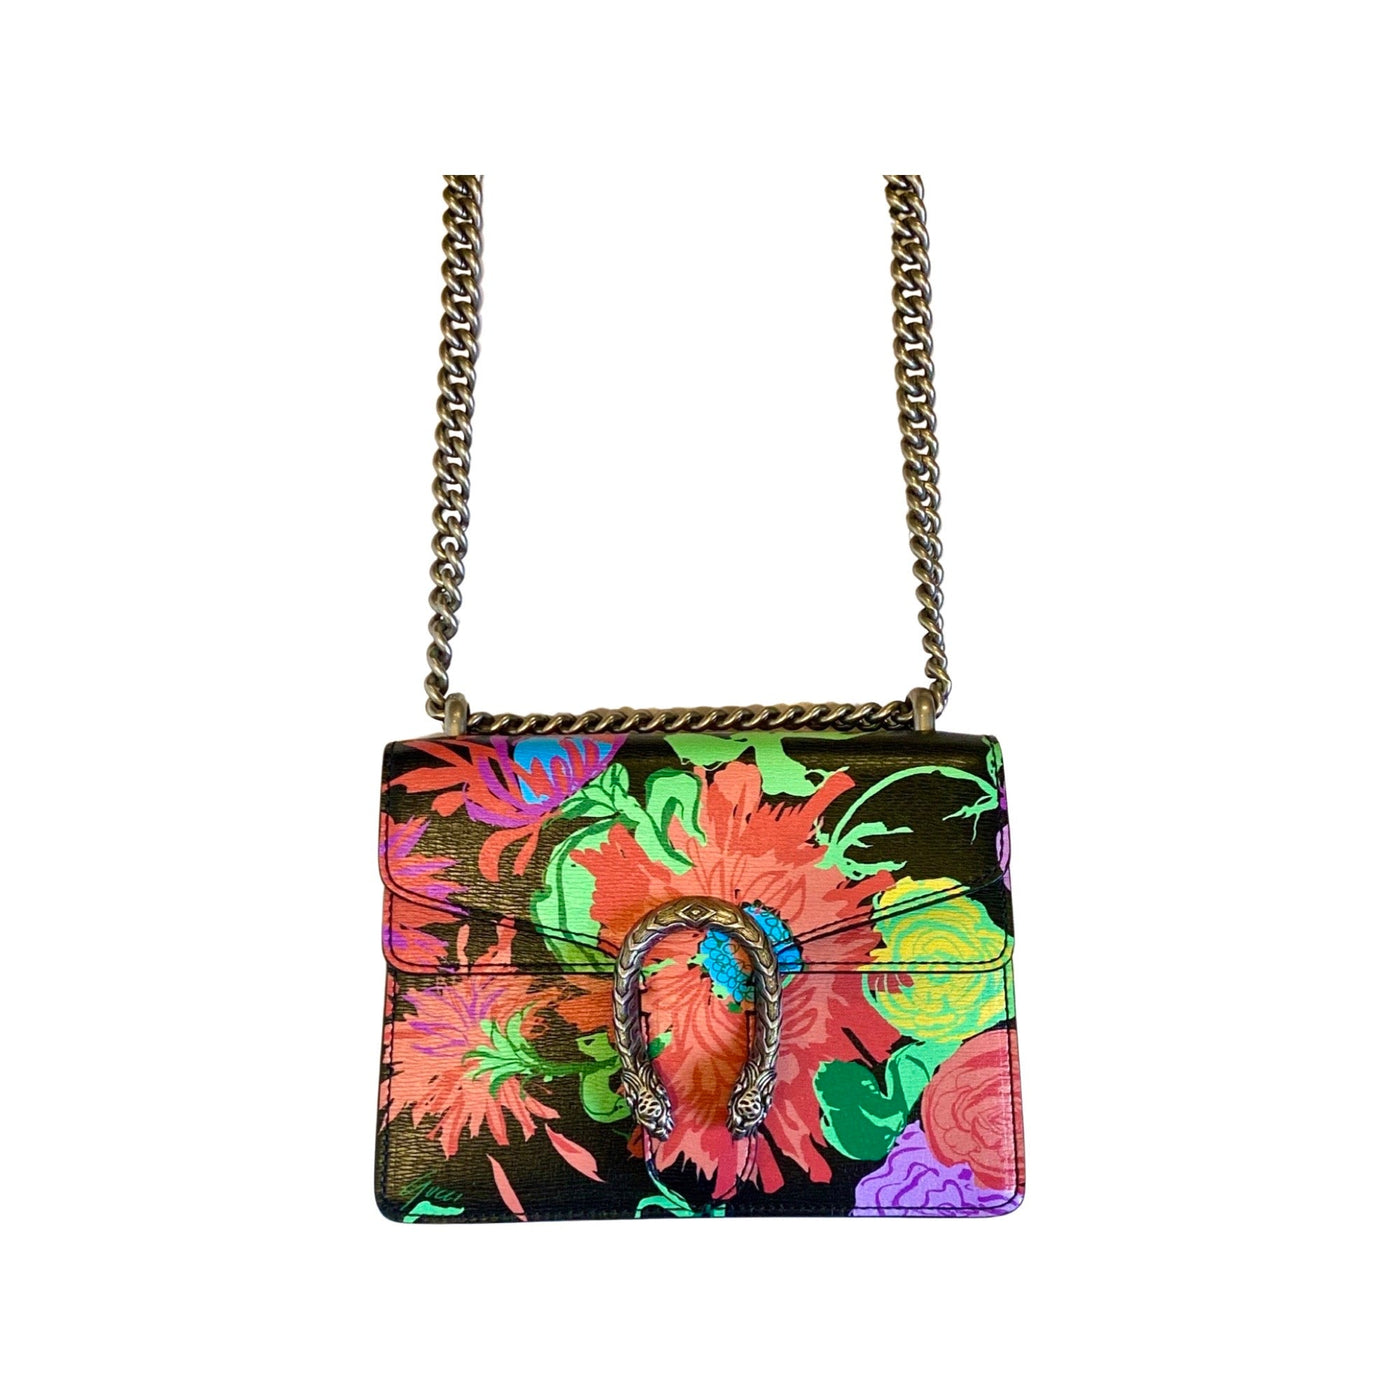 Gucci x Ken Scott Dionysus Floral Print Small Shoulder Bag 421979 - LUXURYMRKT